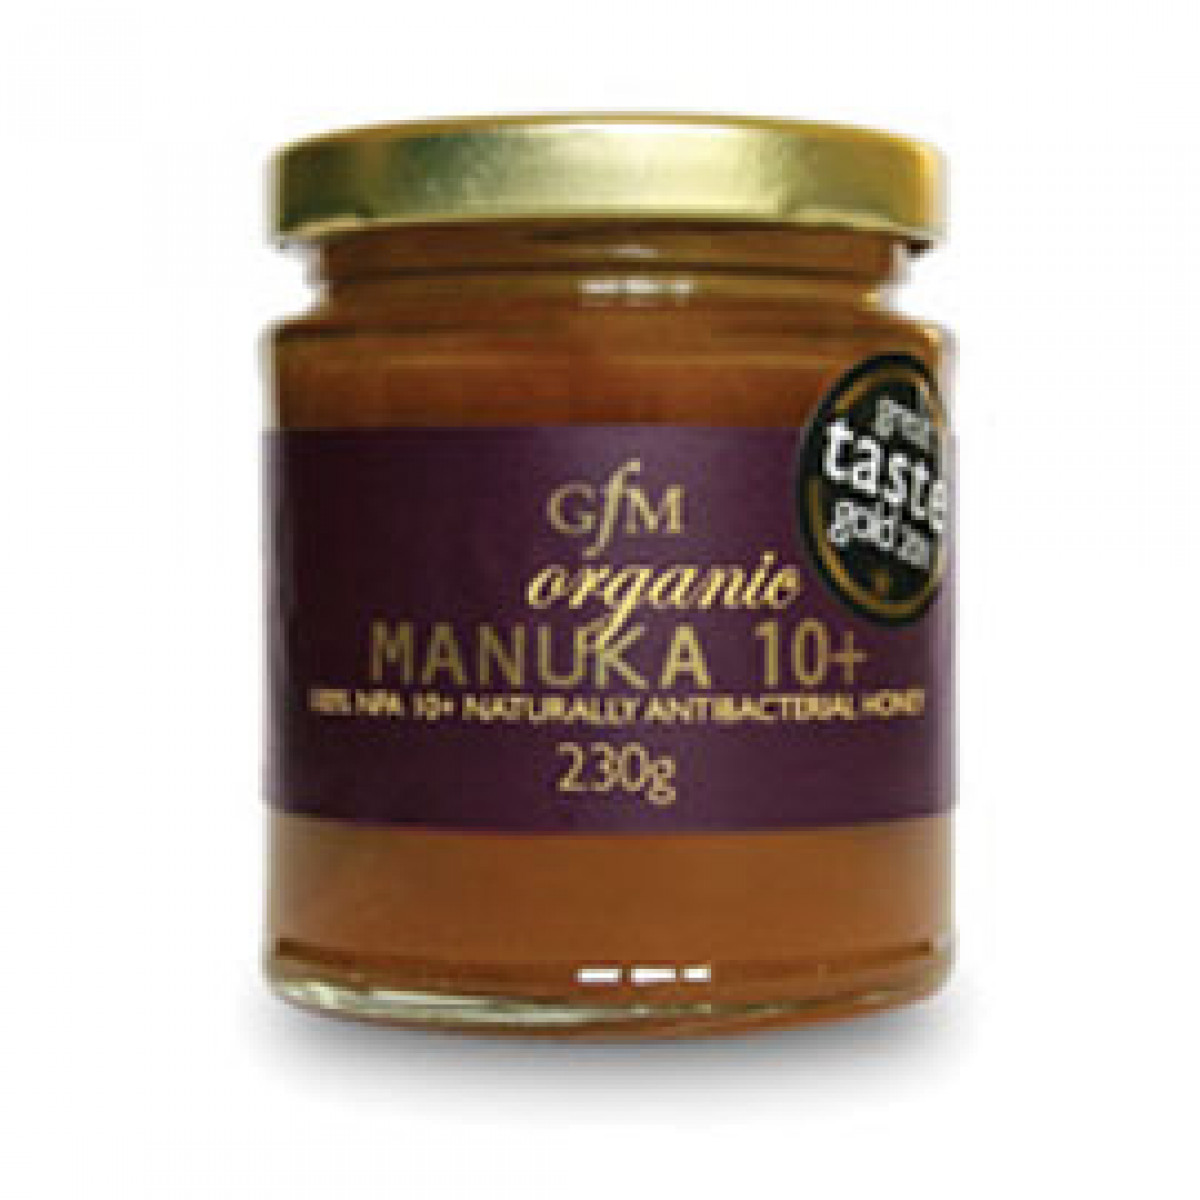 Product picture for Manuka Honey NPA 10+